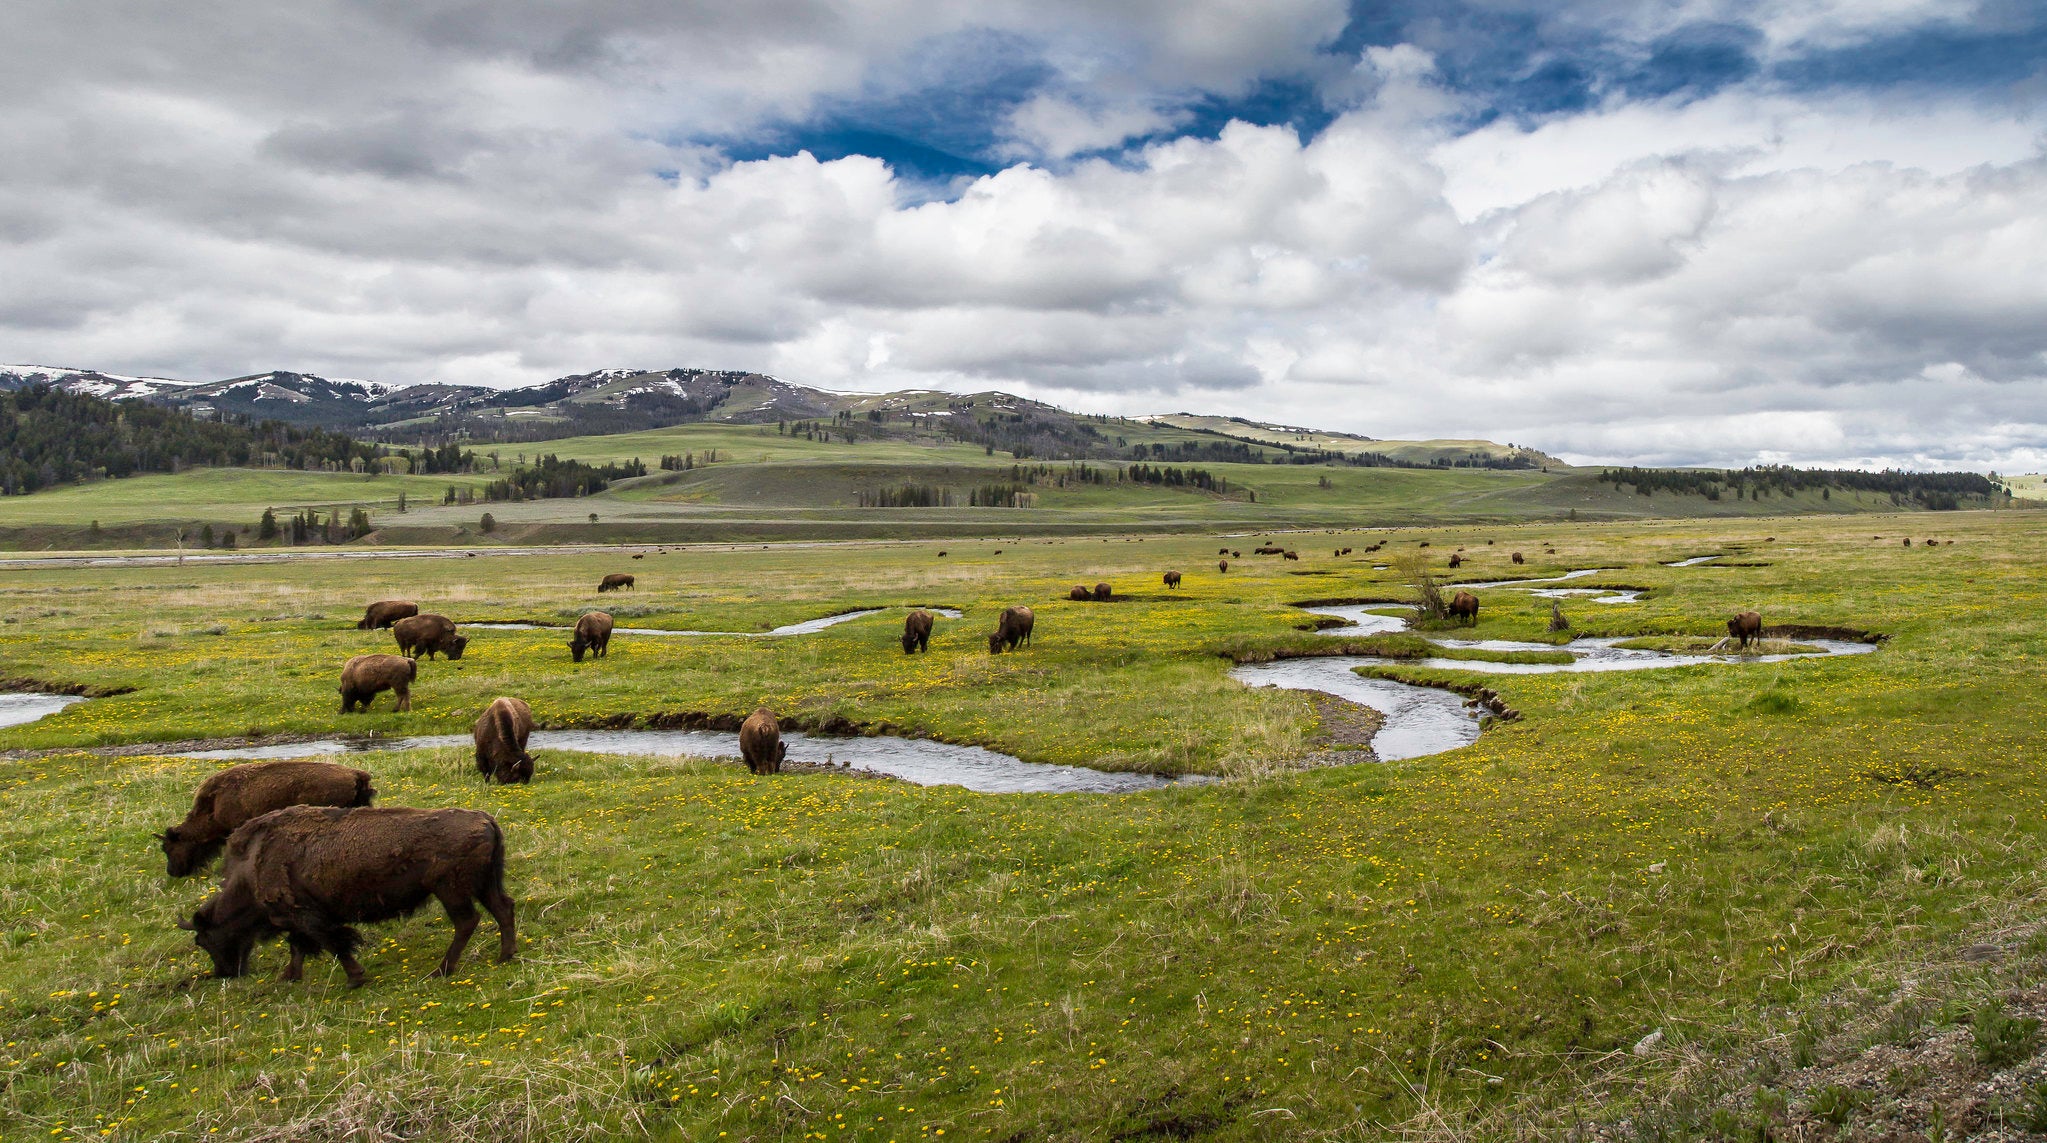 Bison along Rose Creek in Lamar Valley image by Neal Herbert